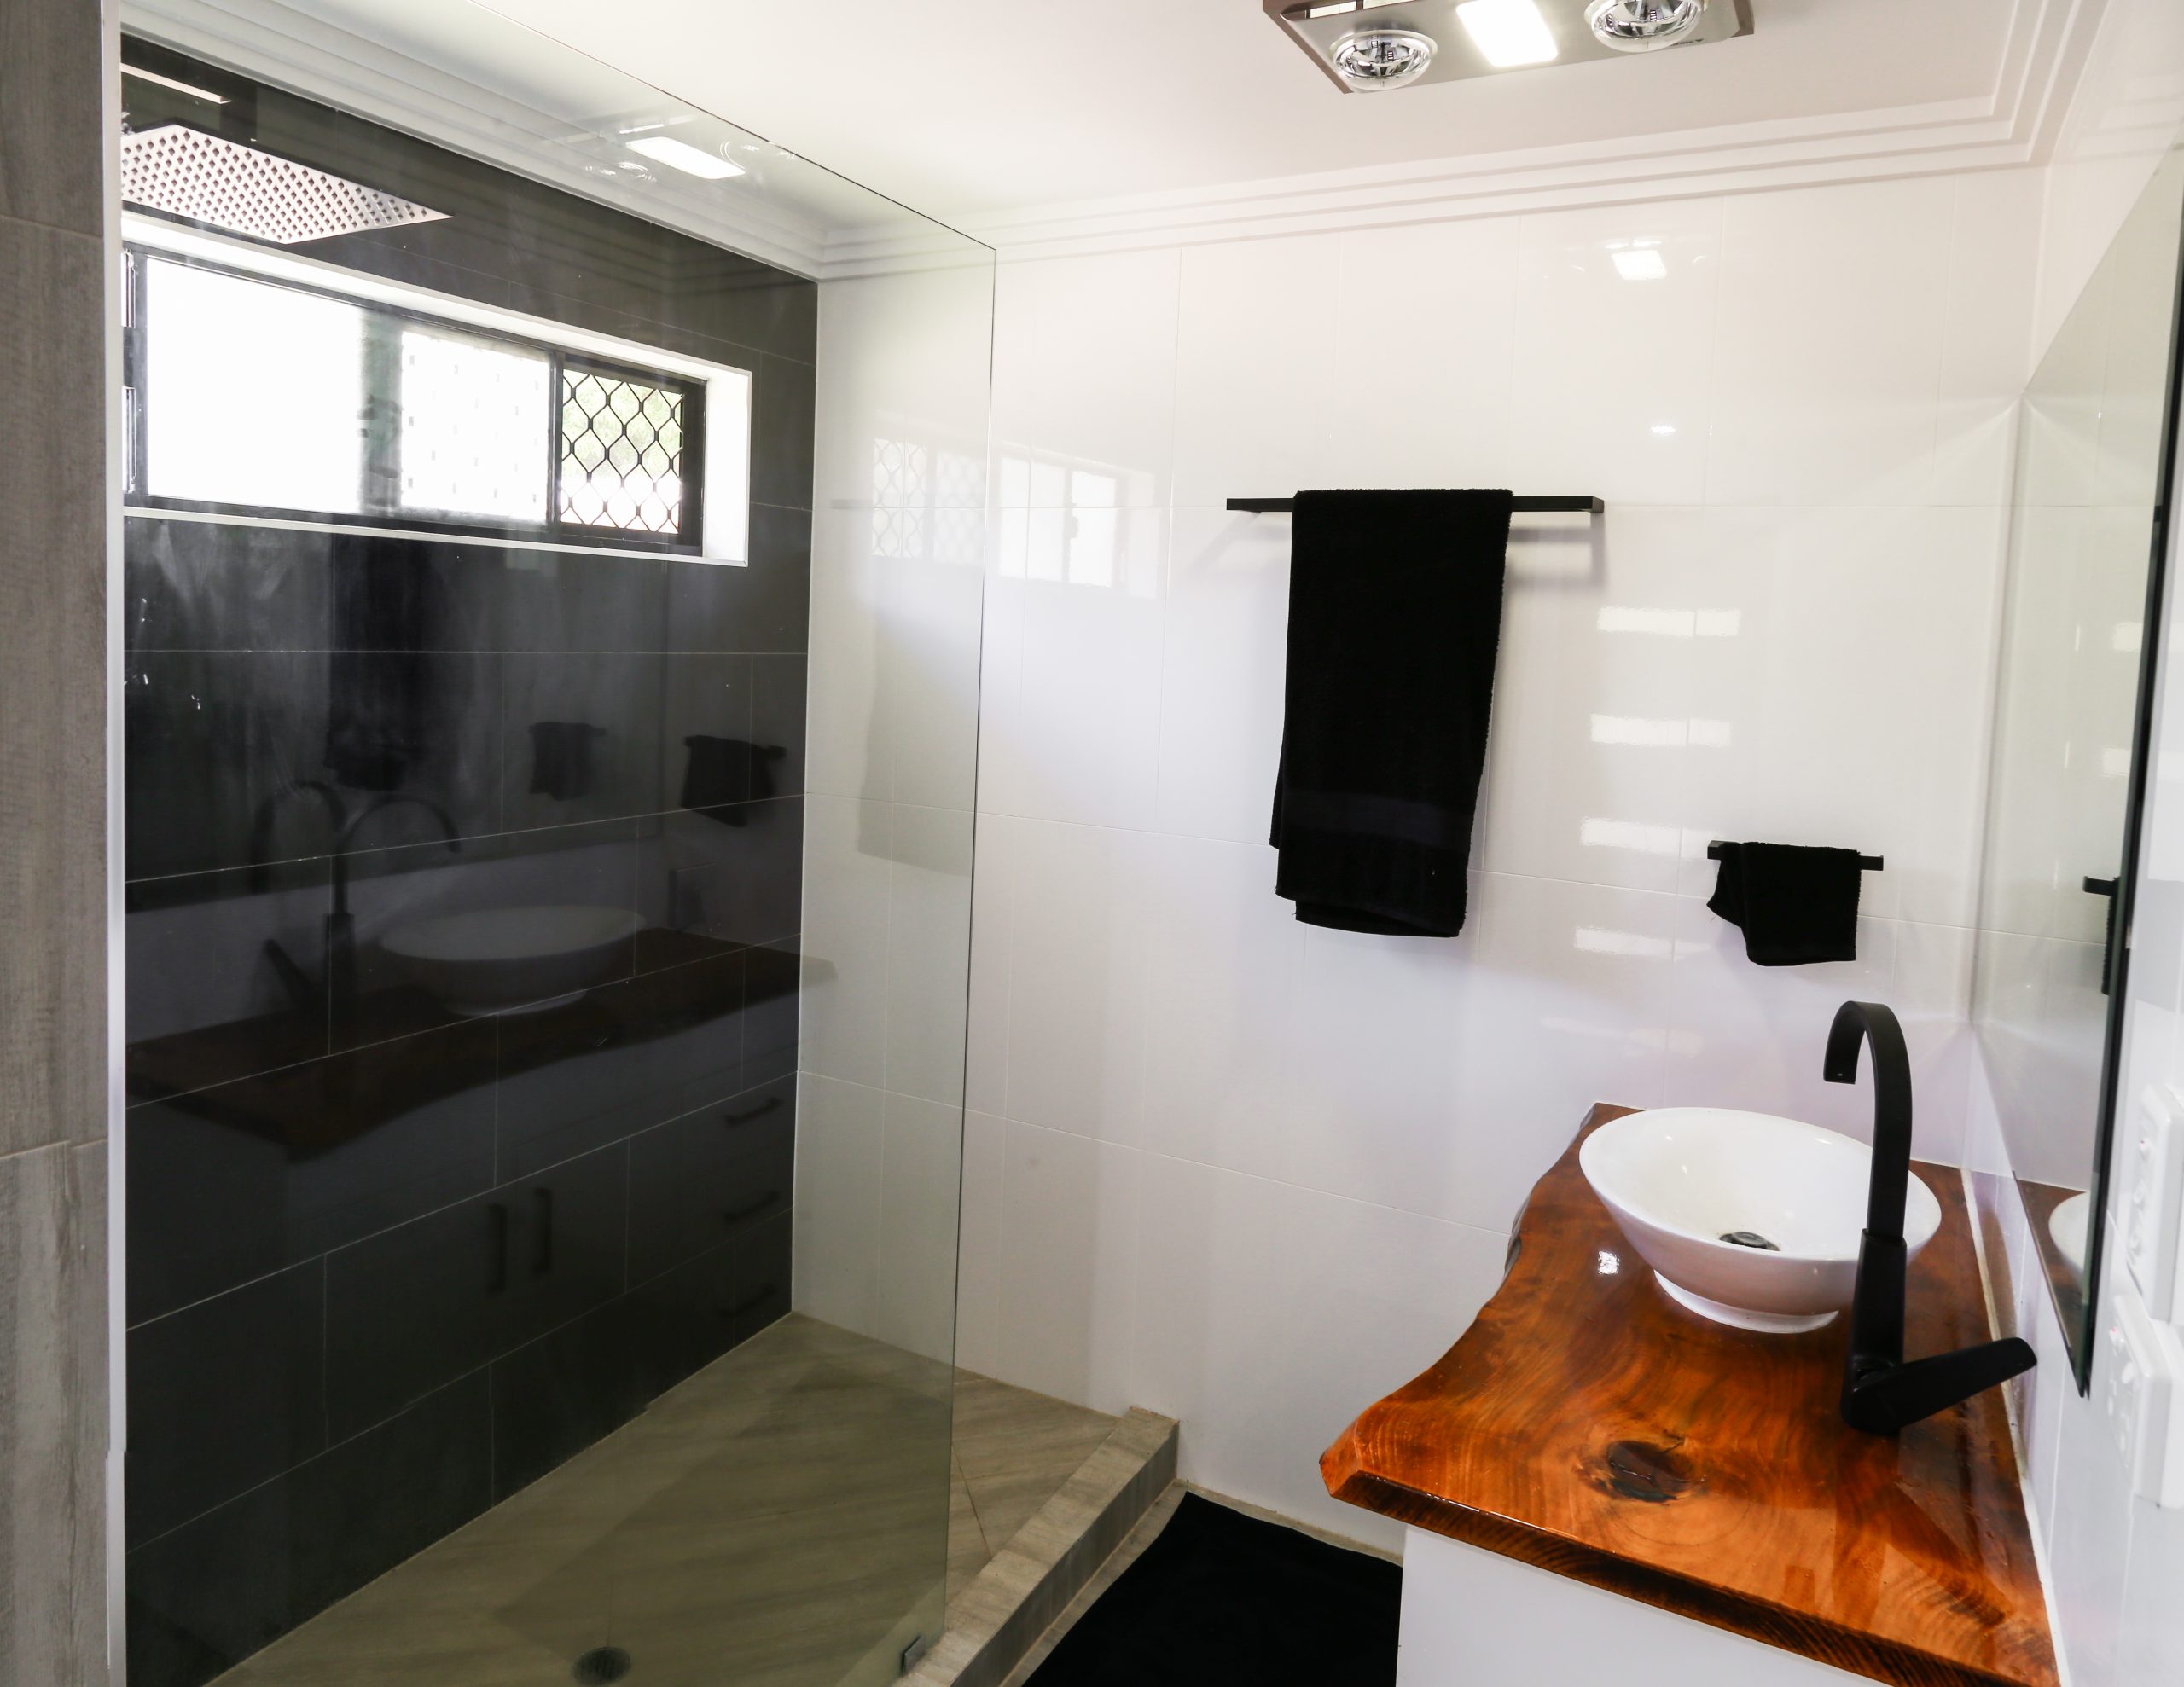 Bathroom Renovations Rockhampton, Home Renovations Builders